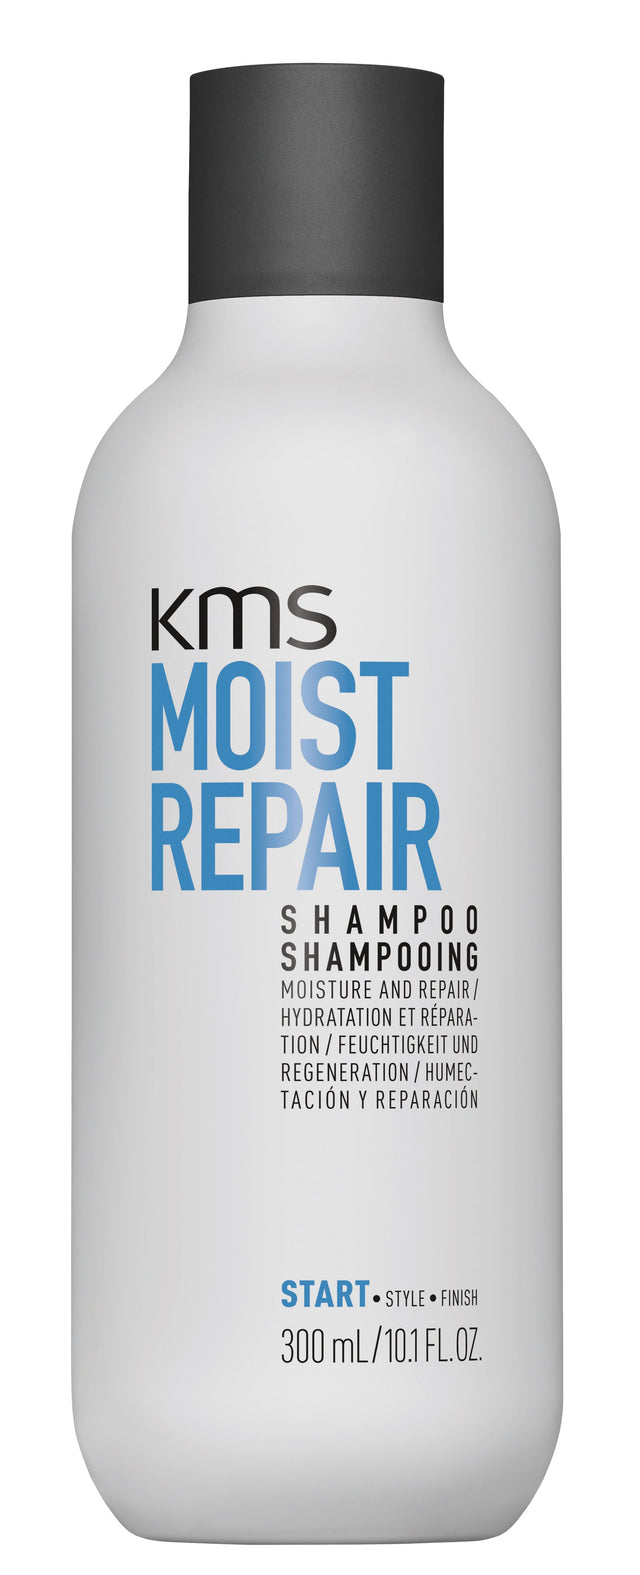 MoistRepair Shampoo Image thumbnail